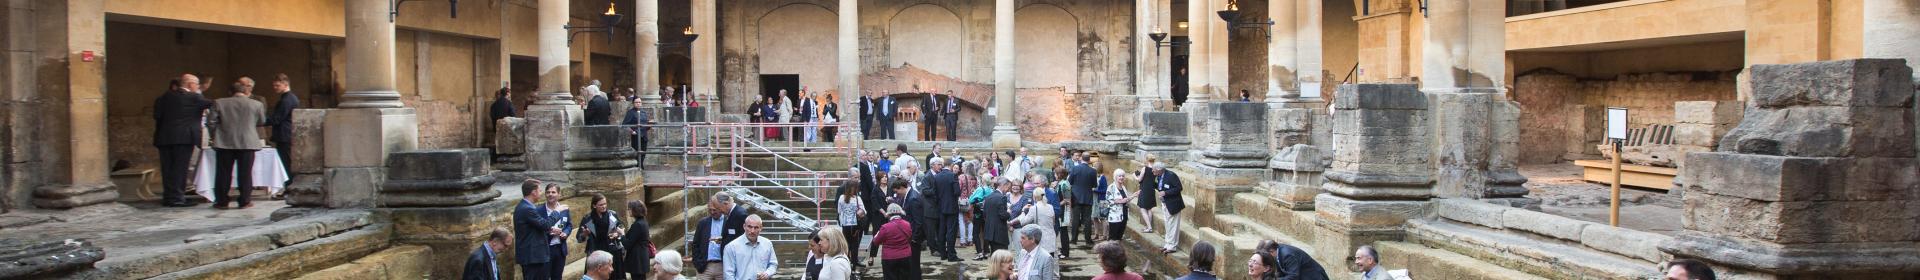 Image: A Roman Baths Foundation event